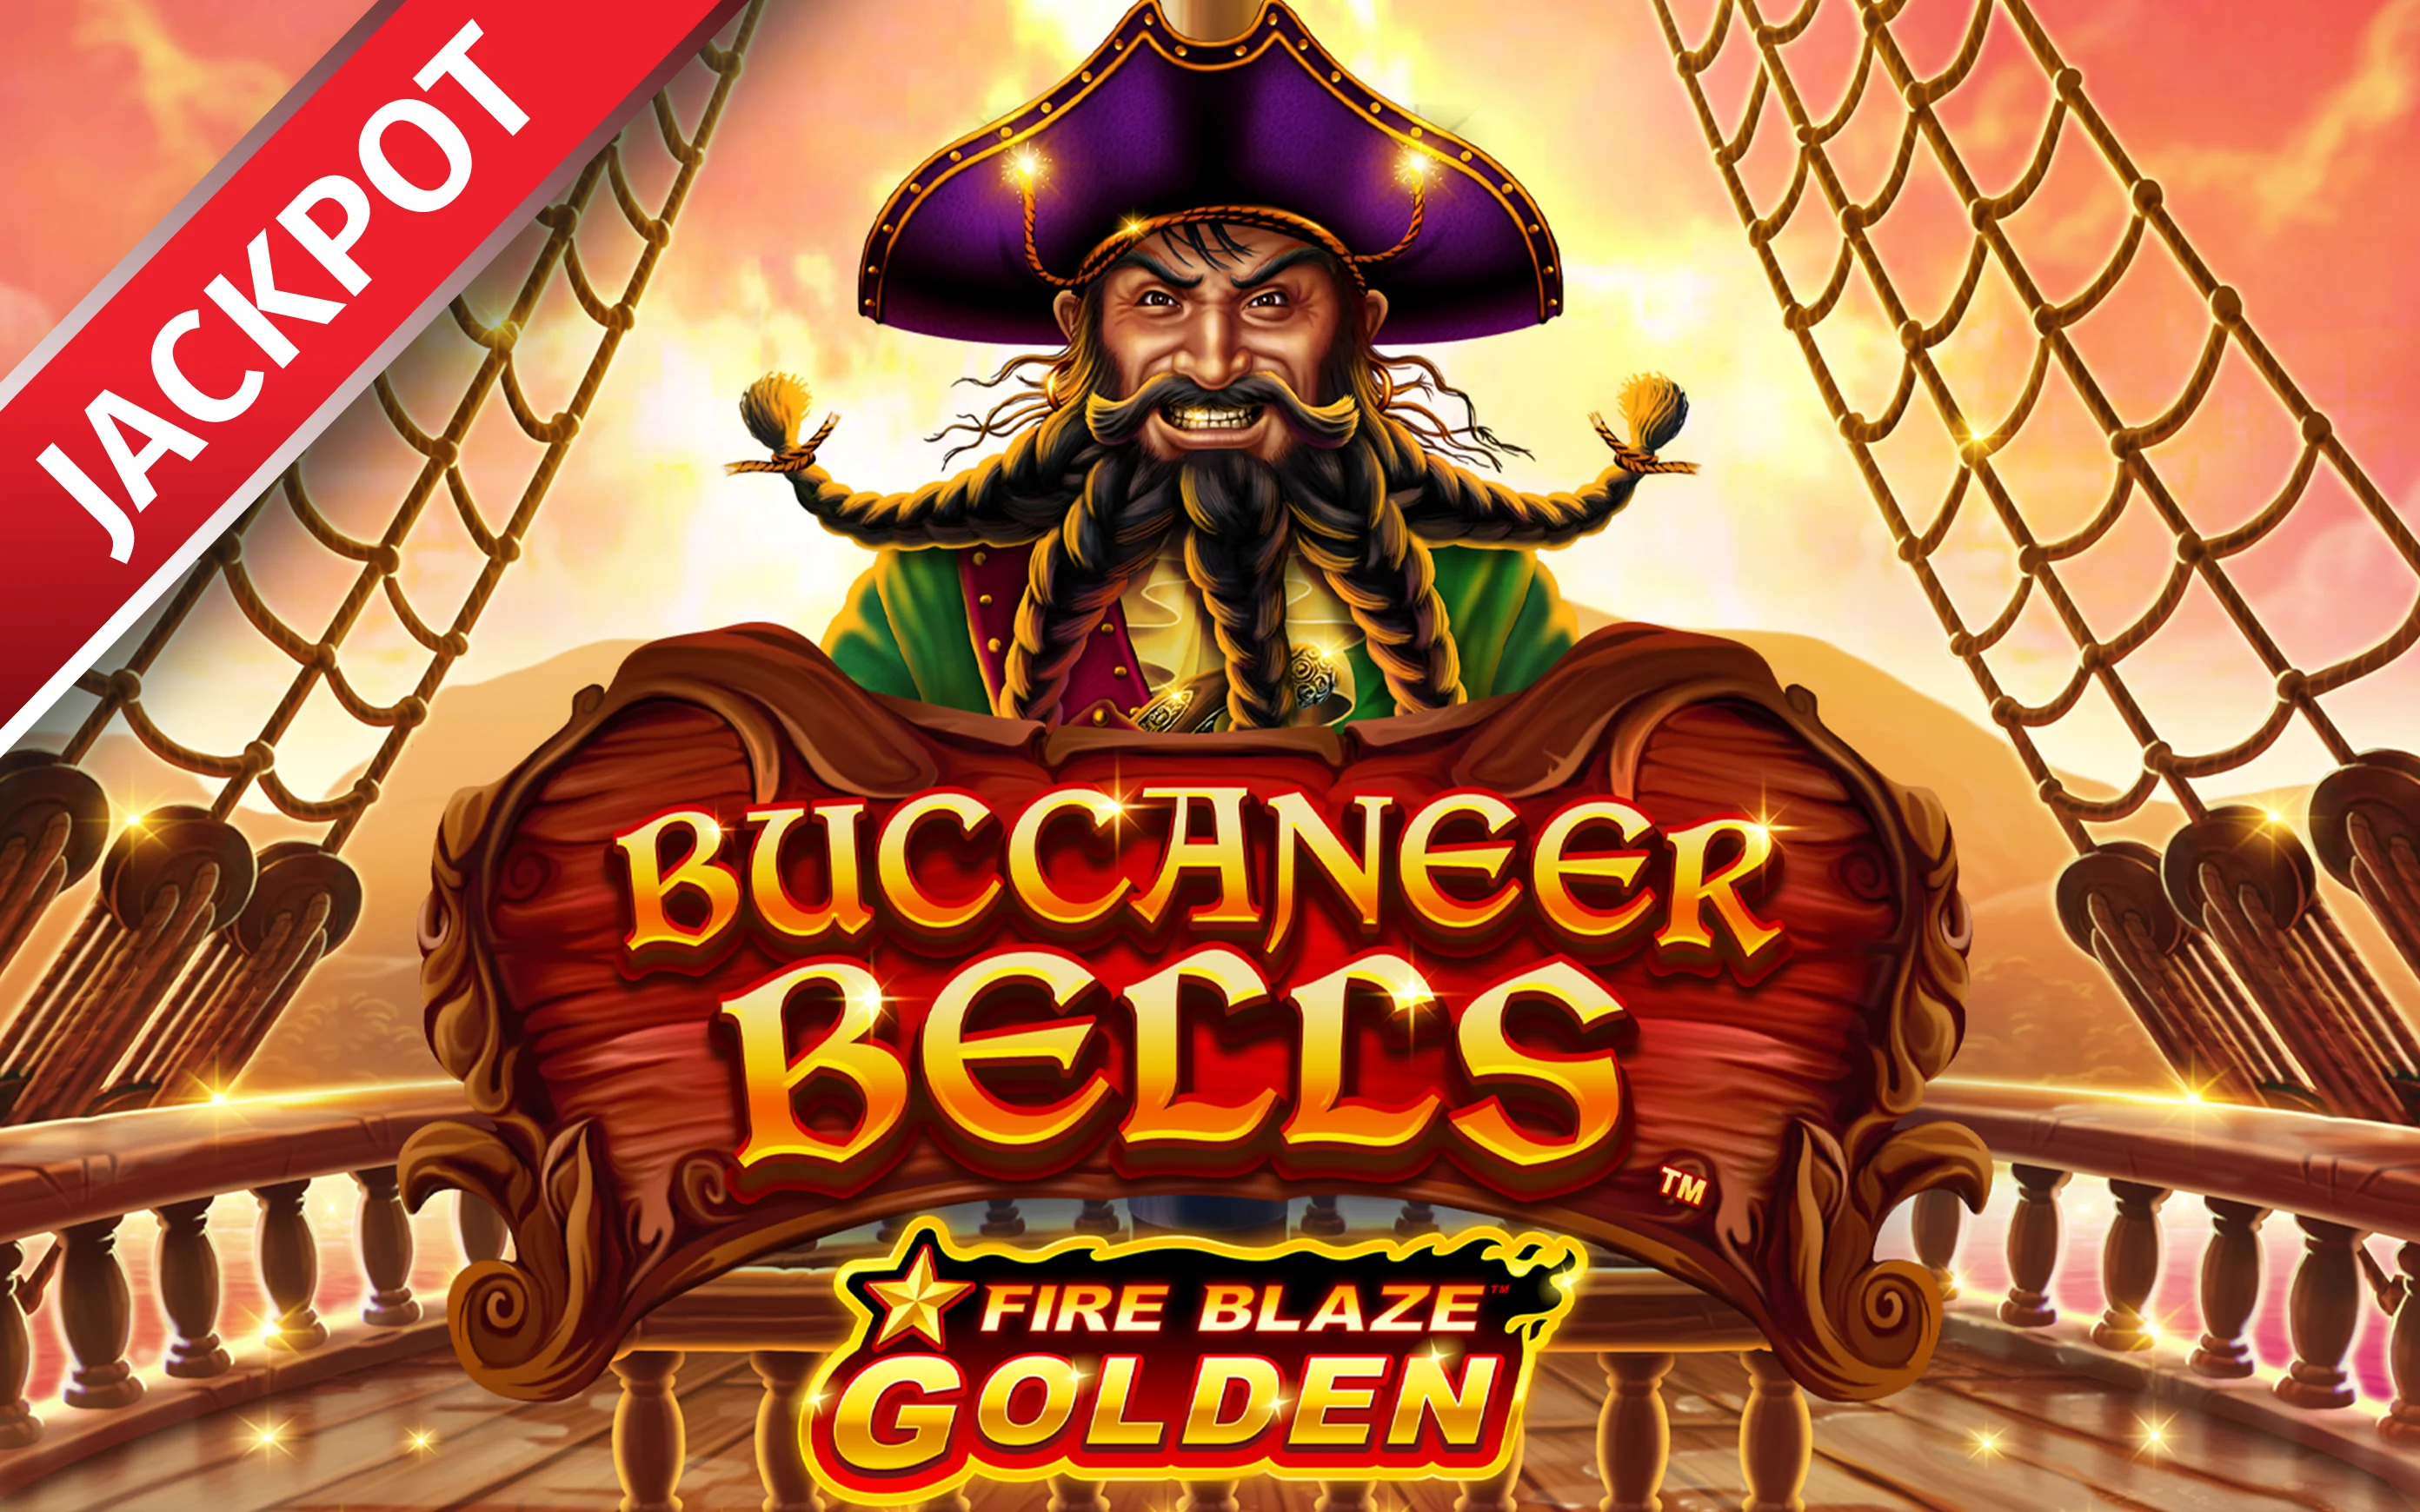 Joacă Fire Blaze Golden Buccaneer Bells în cazinoul online Starcasino.be